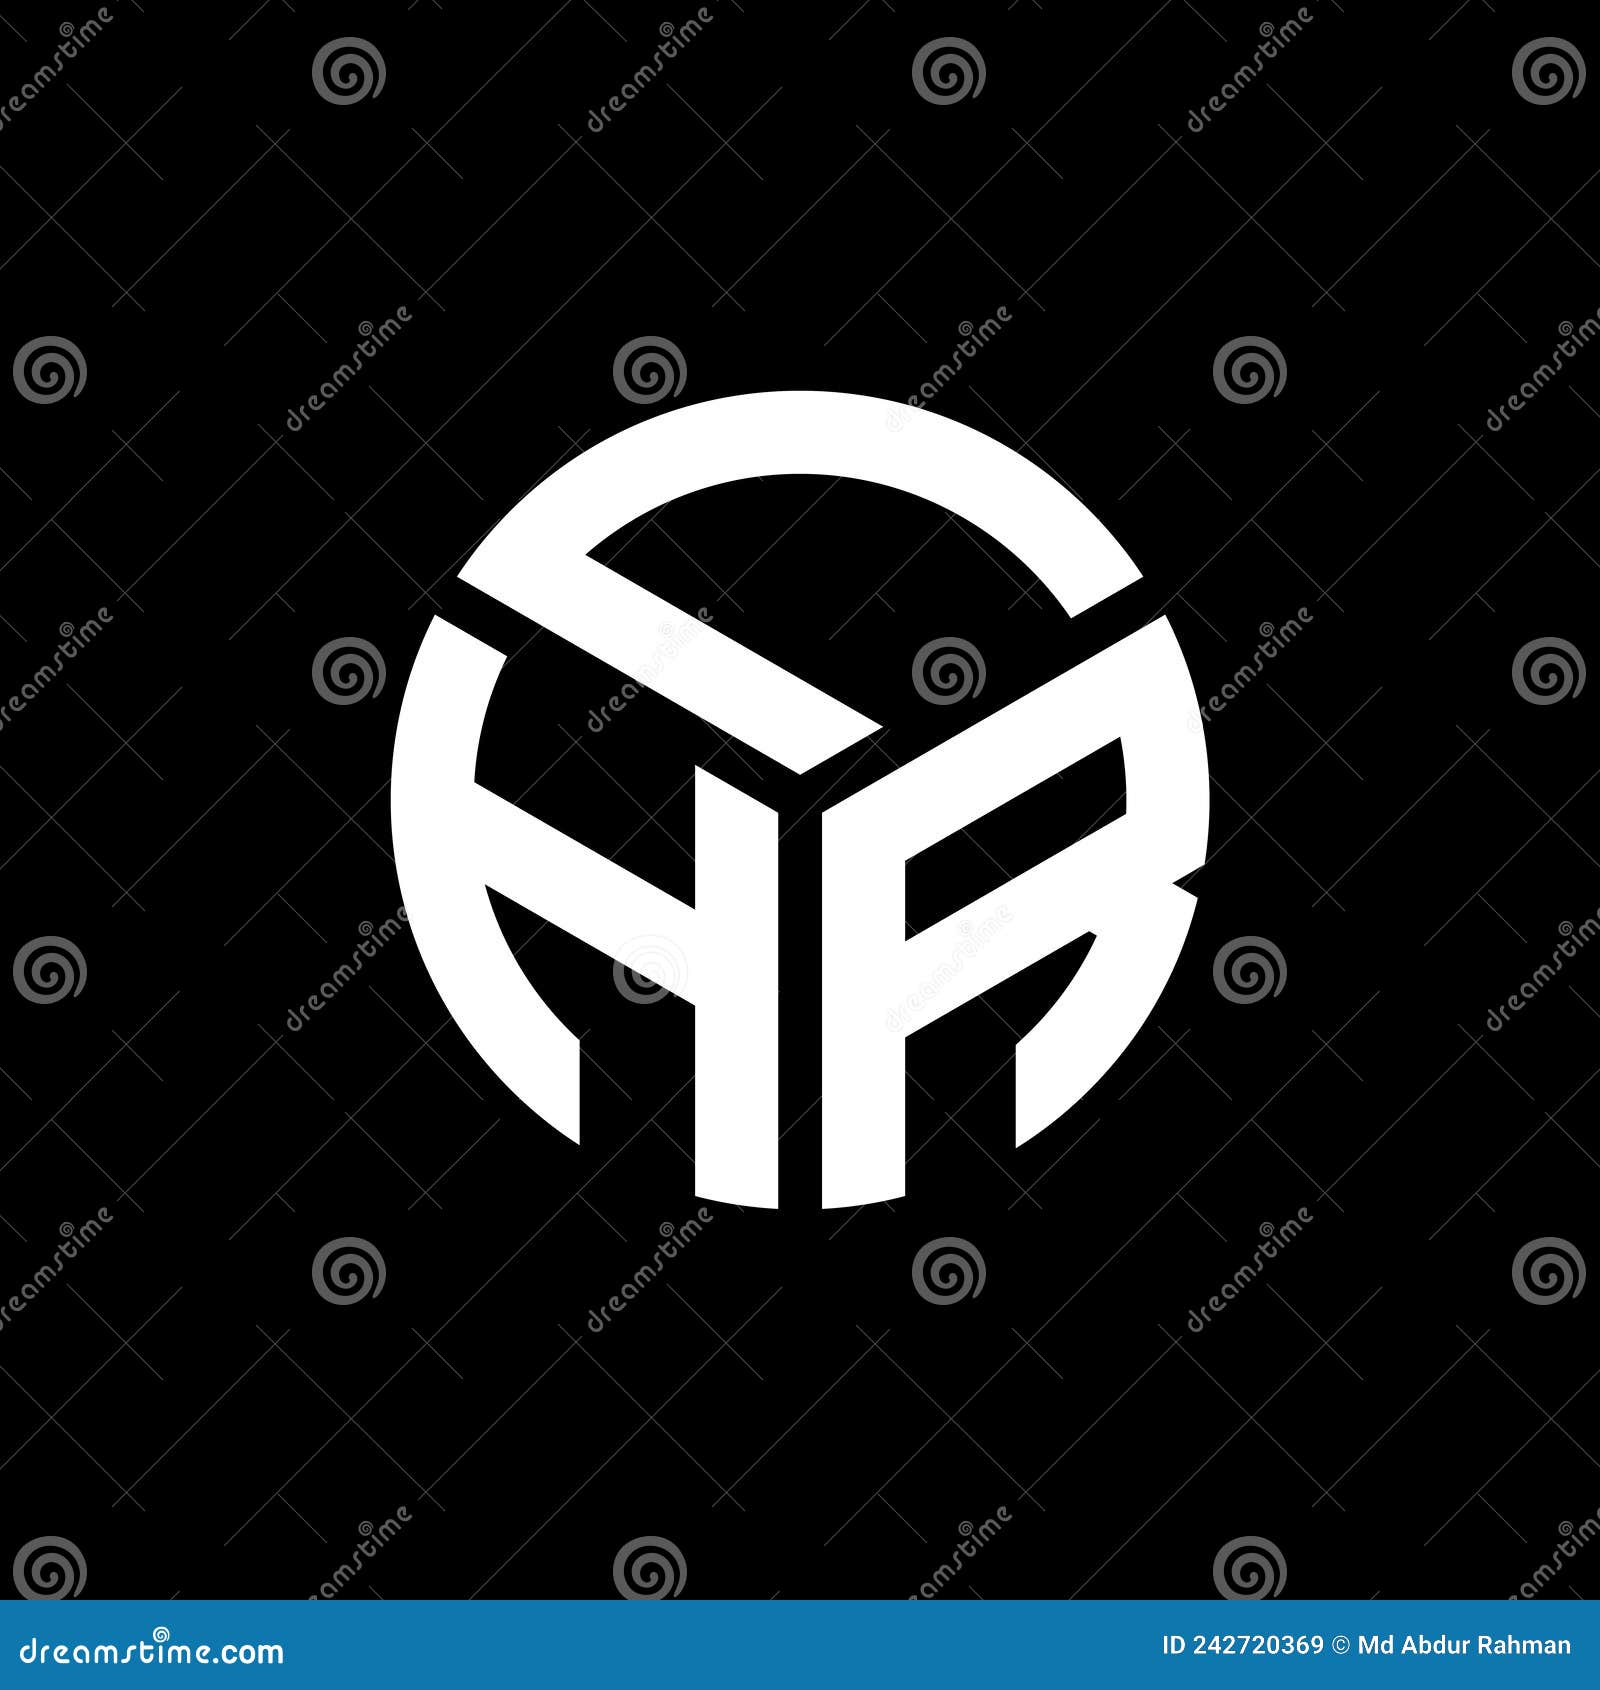 lhr letter logo  on black background. lhr creative initials letter logo concept. lhr letter 